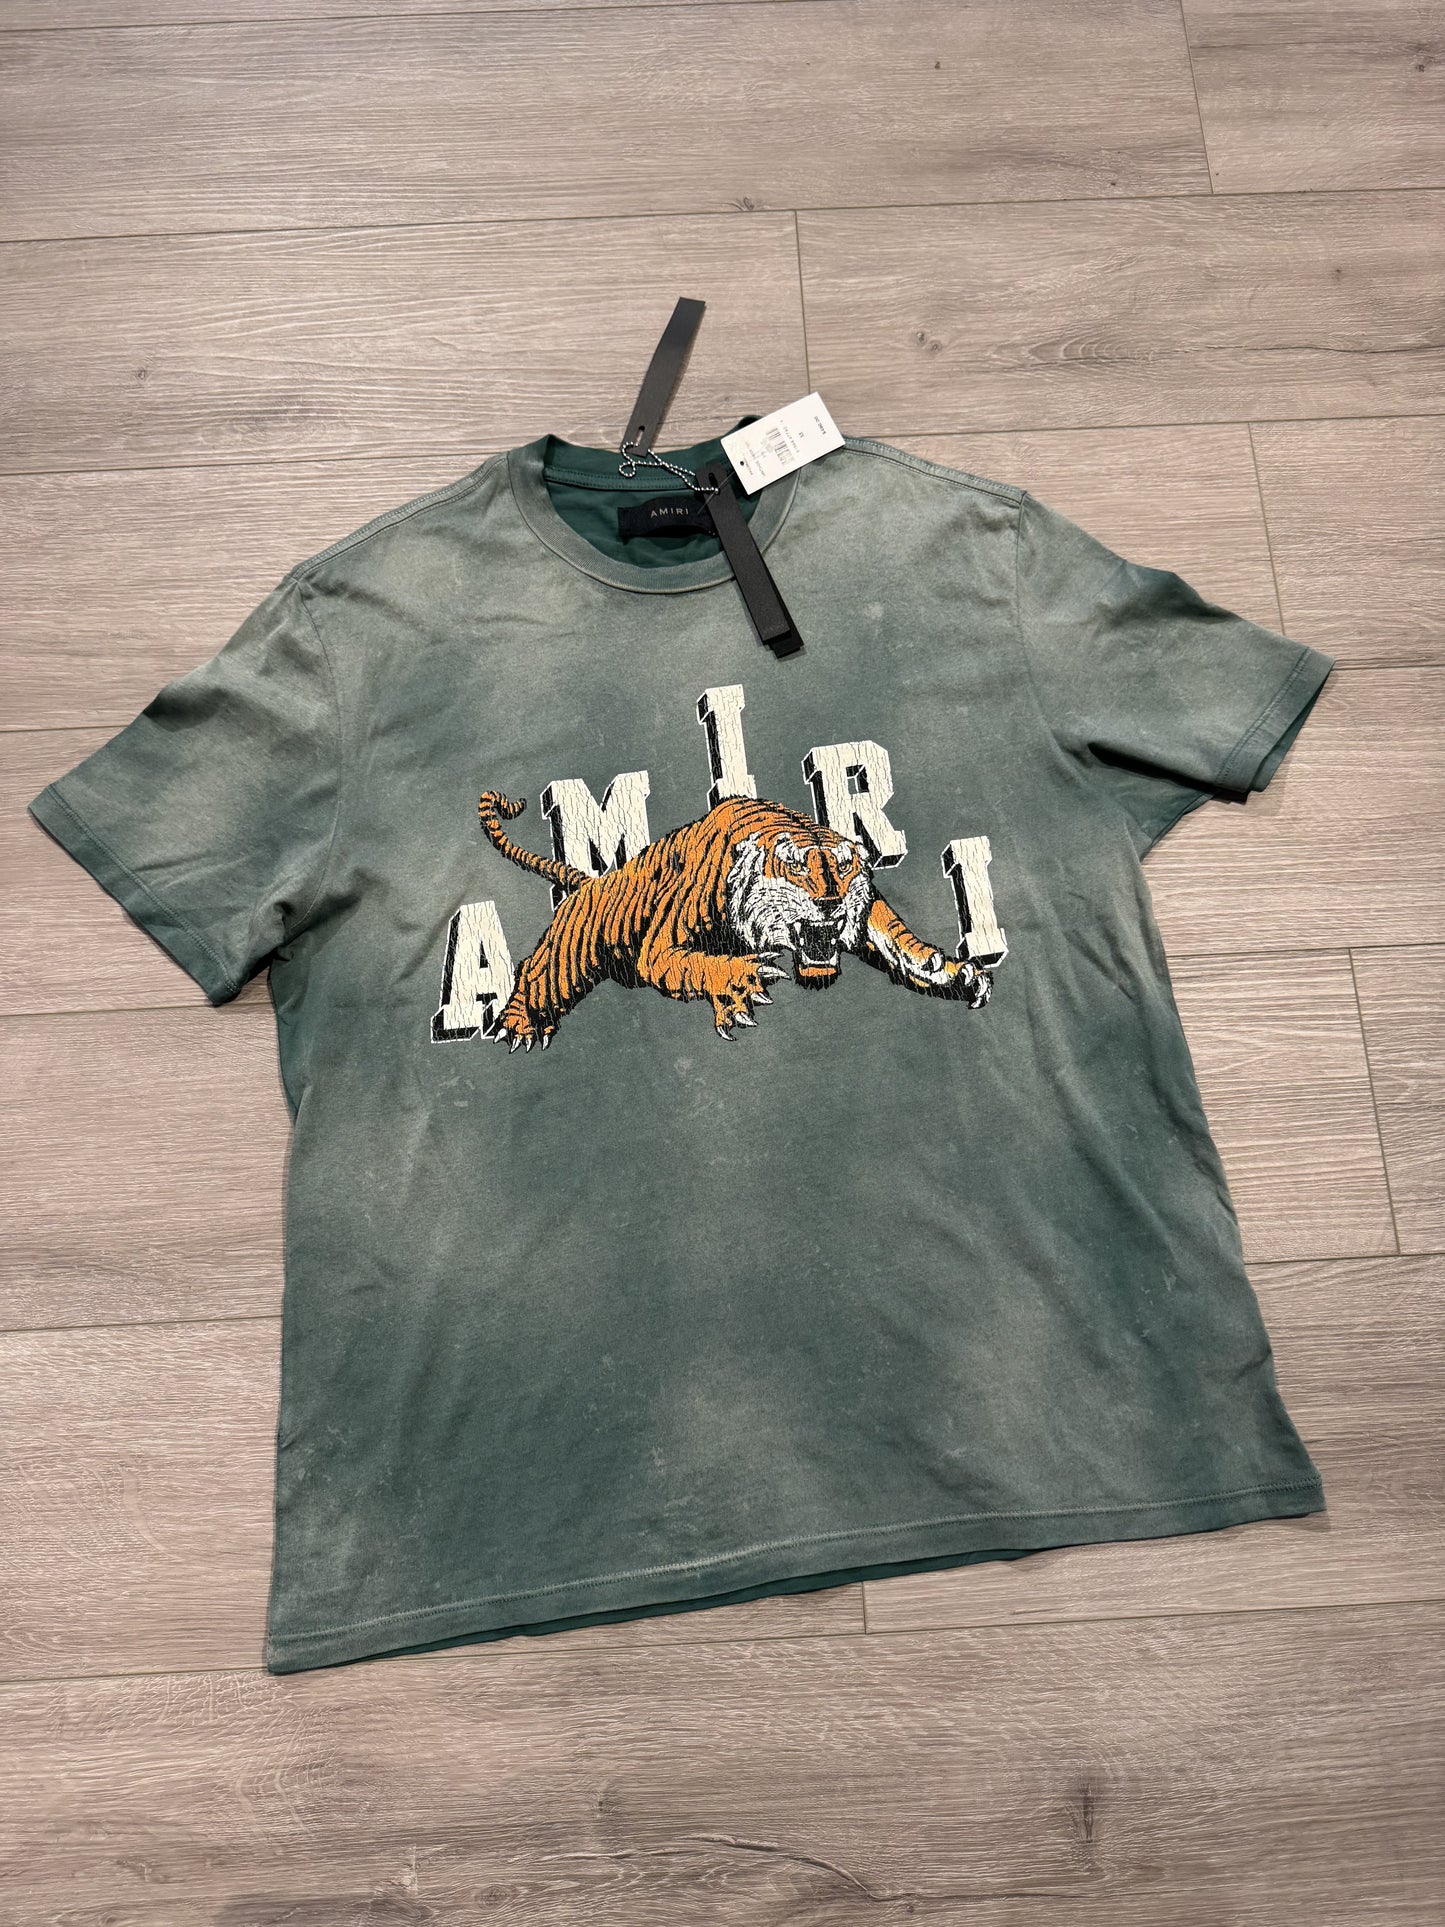 Amiri “Tiger” Shirts